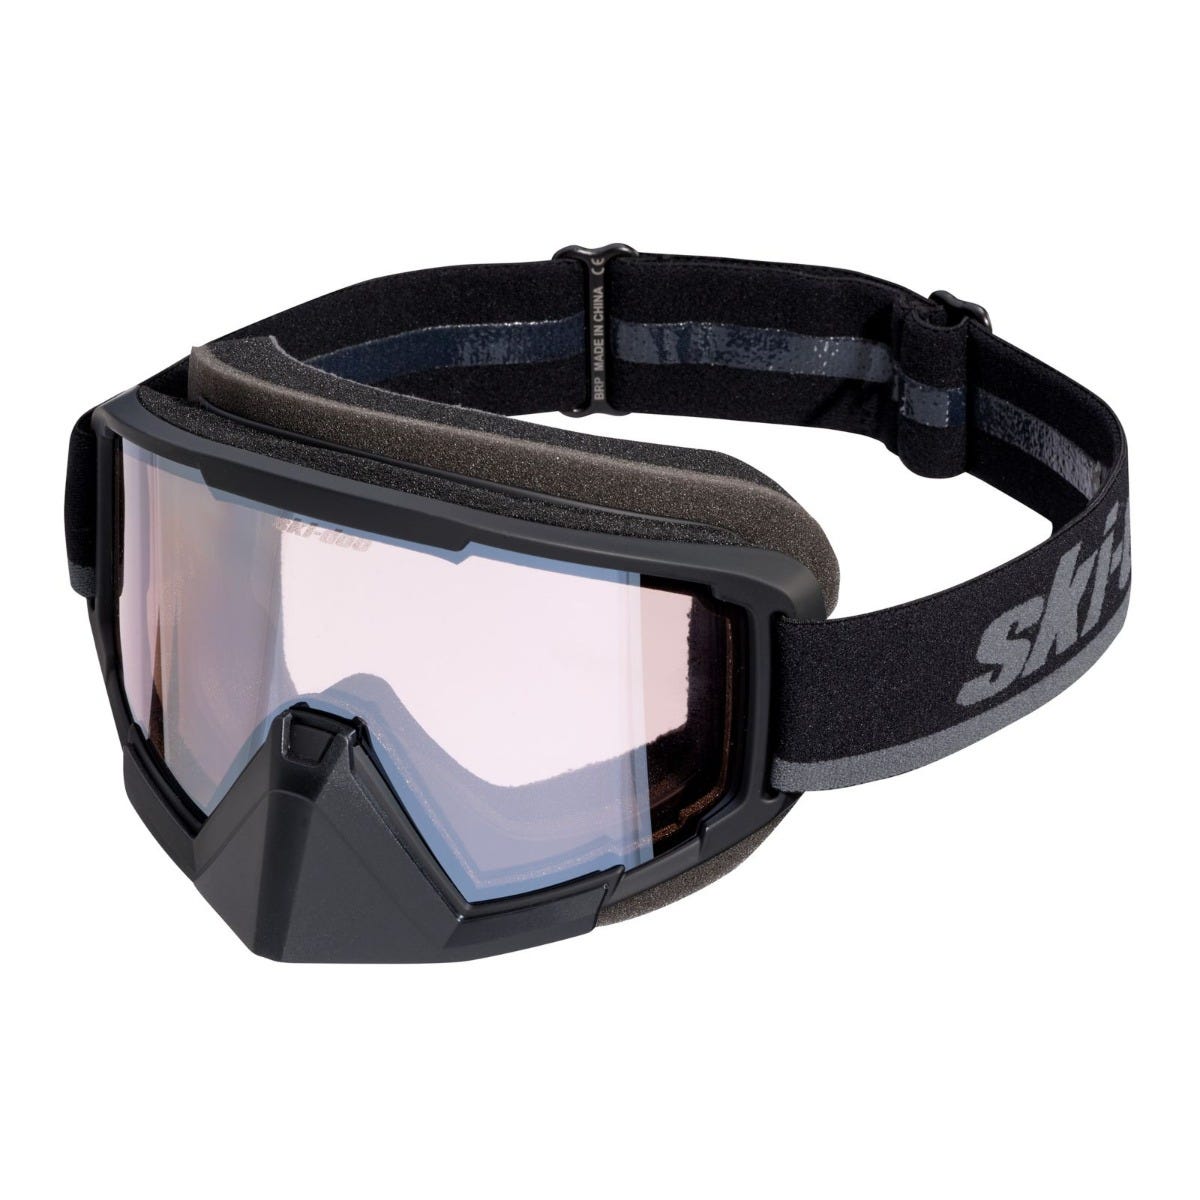 Ski-Doo Trench XL Goggles / Black / Onesize